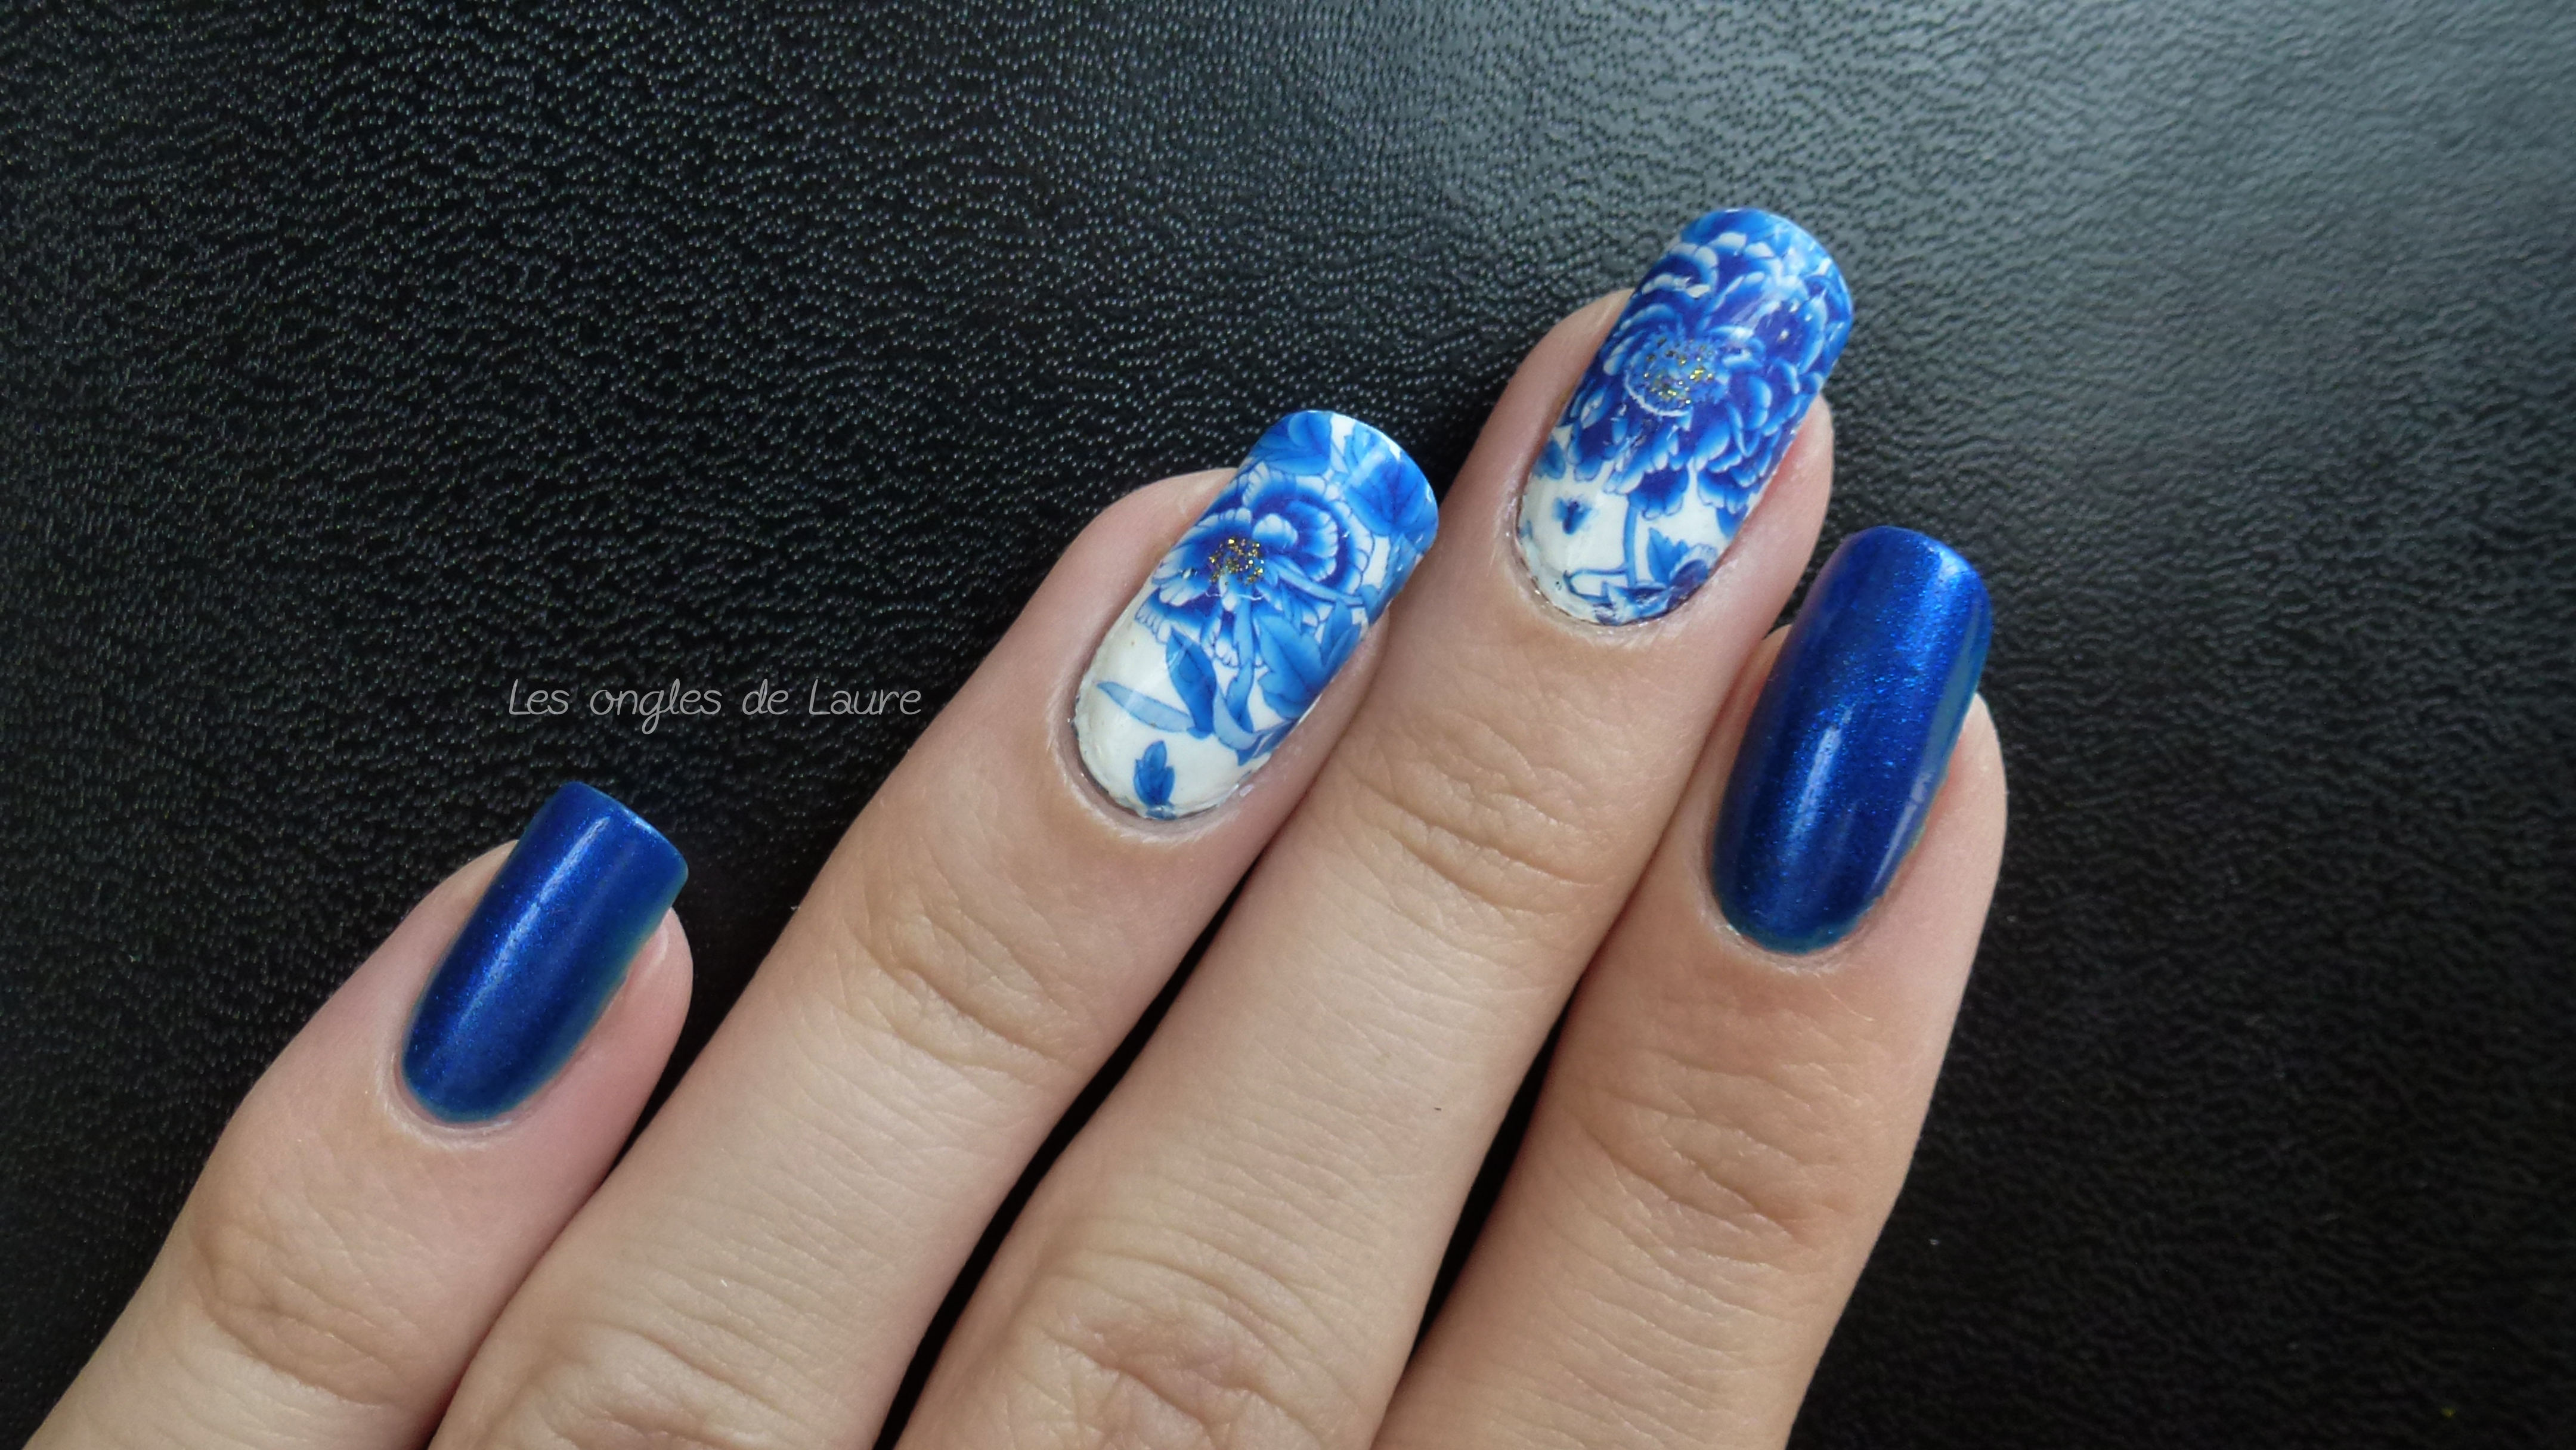 Nail art fleur bleue en waterdecal - Les ongles de Laure - Blog Nail Art